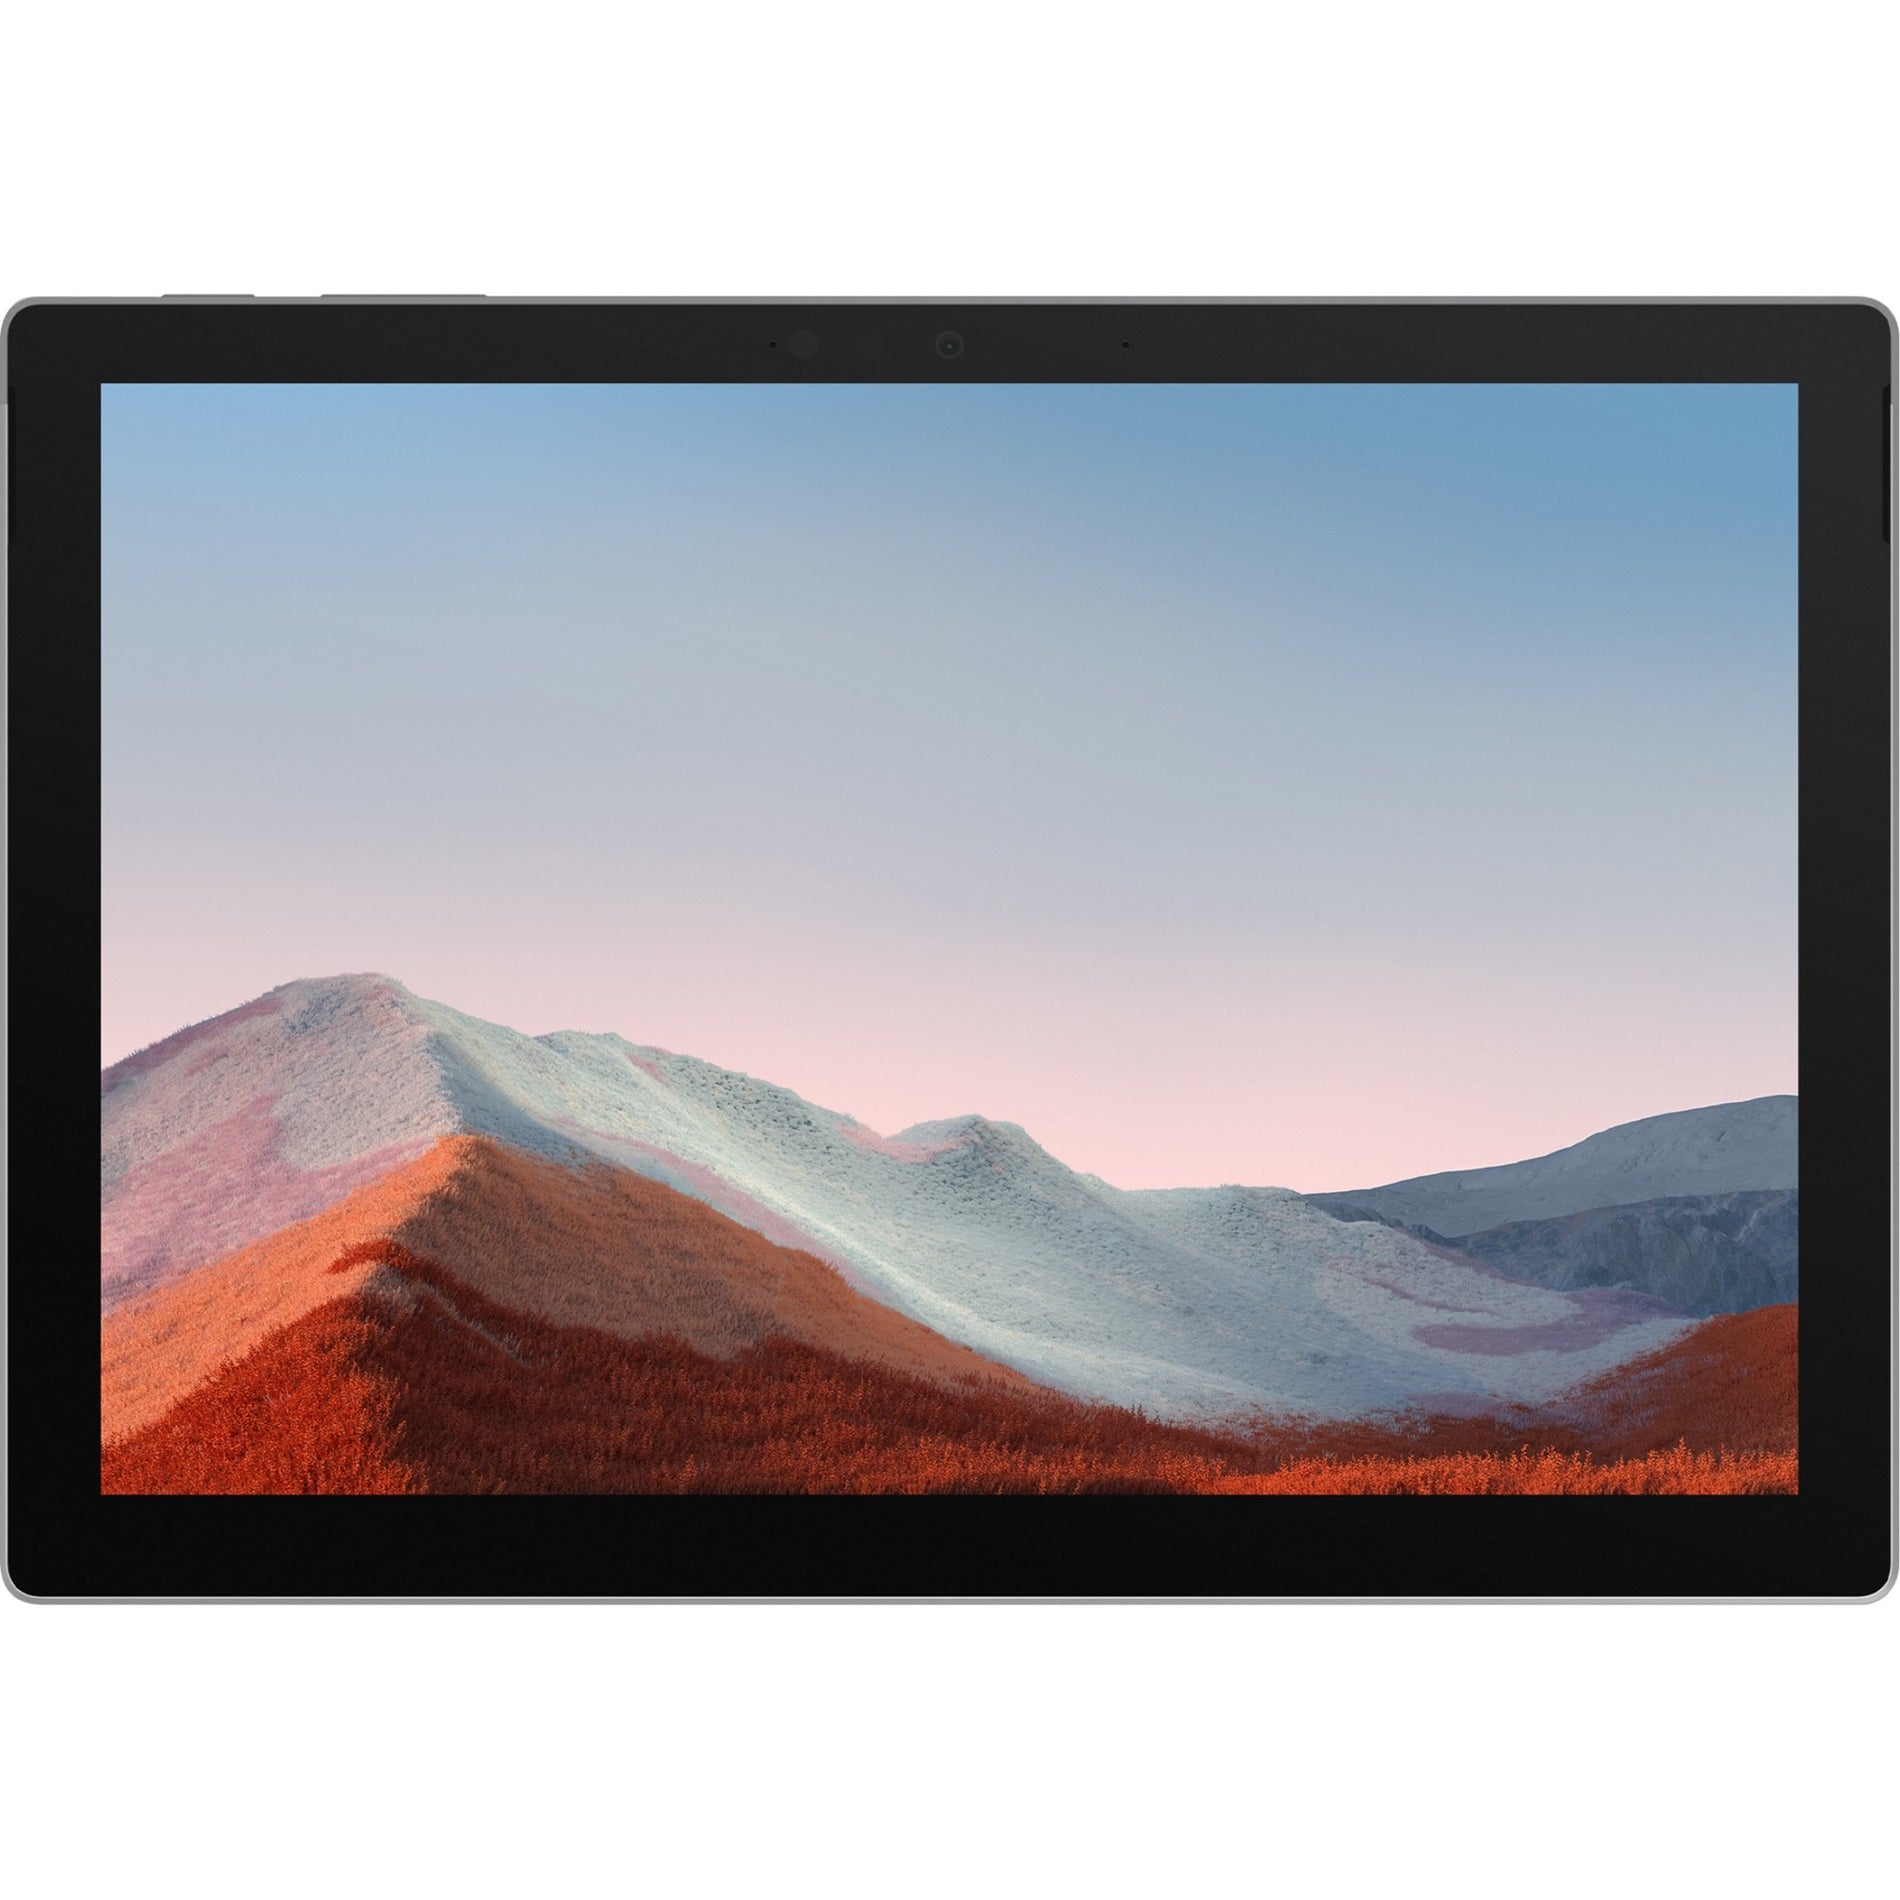 Microsoft 1NC-00001 Surface Pro 7+ Tablet, 12.3" PixelSense Display, Core i7, 16GB RAM, 256GB SSD, Windows 10 Pro